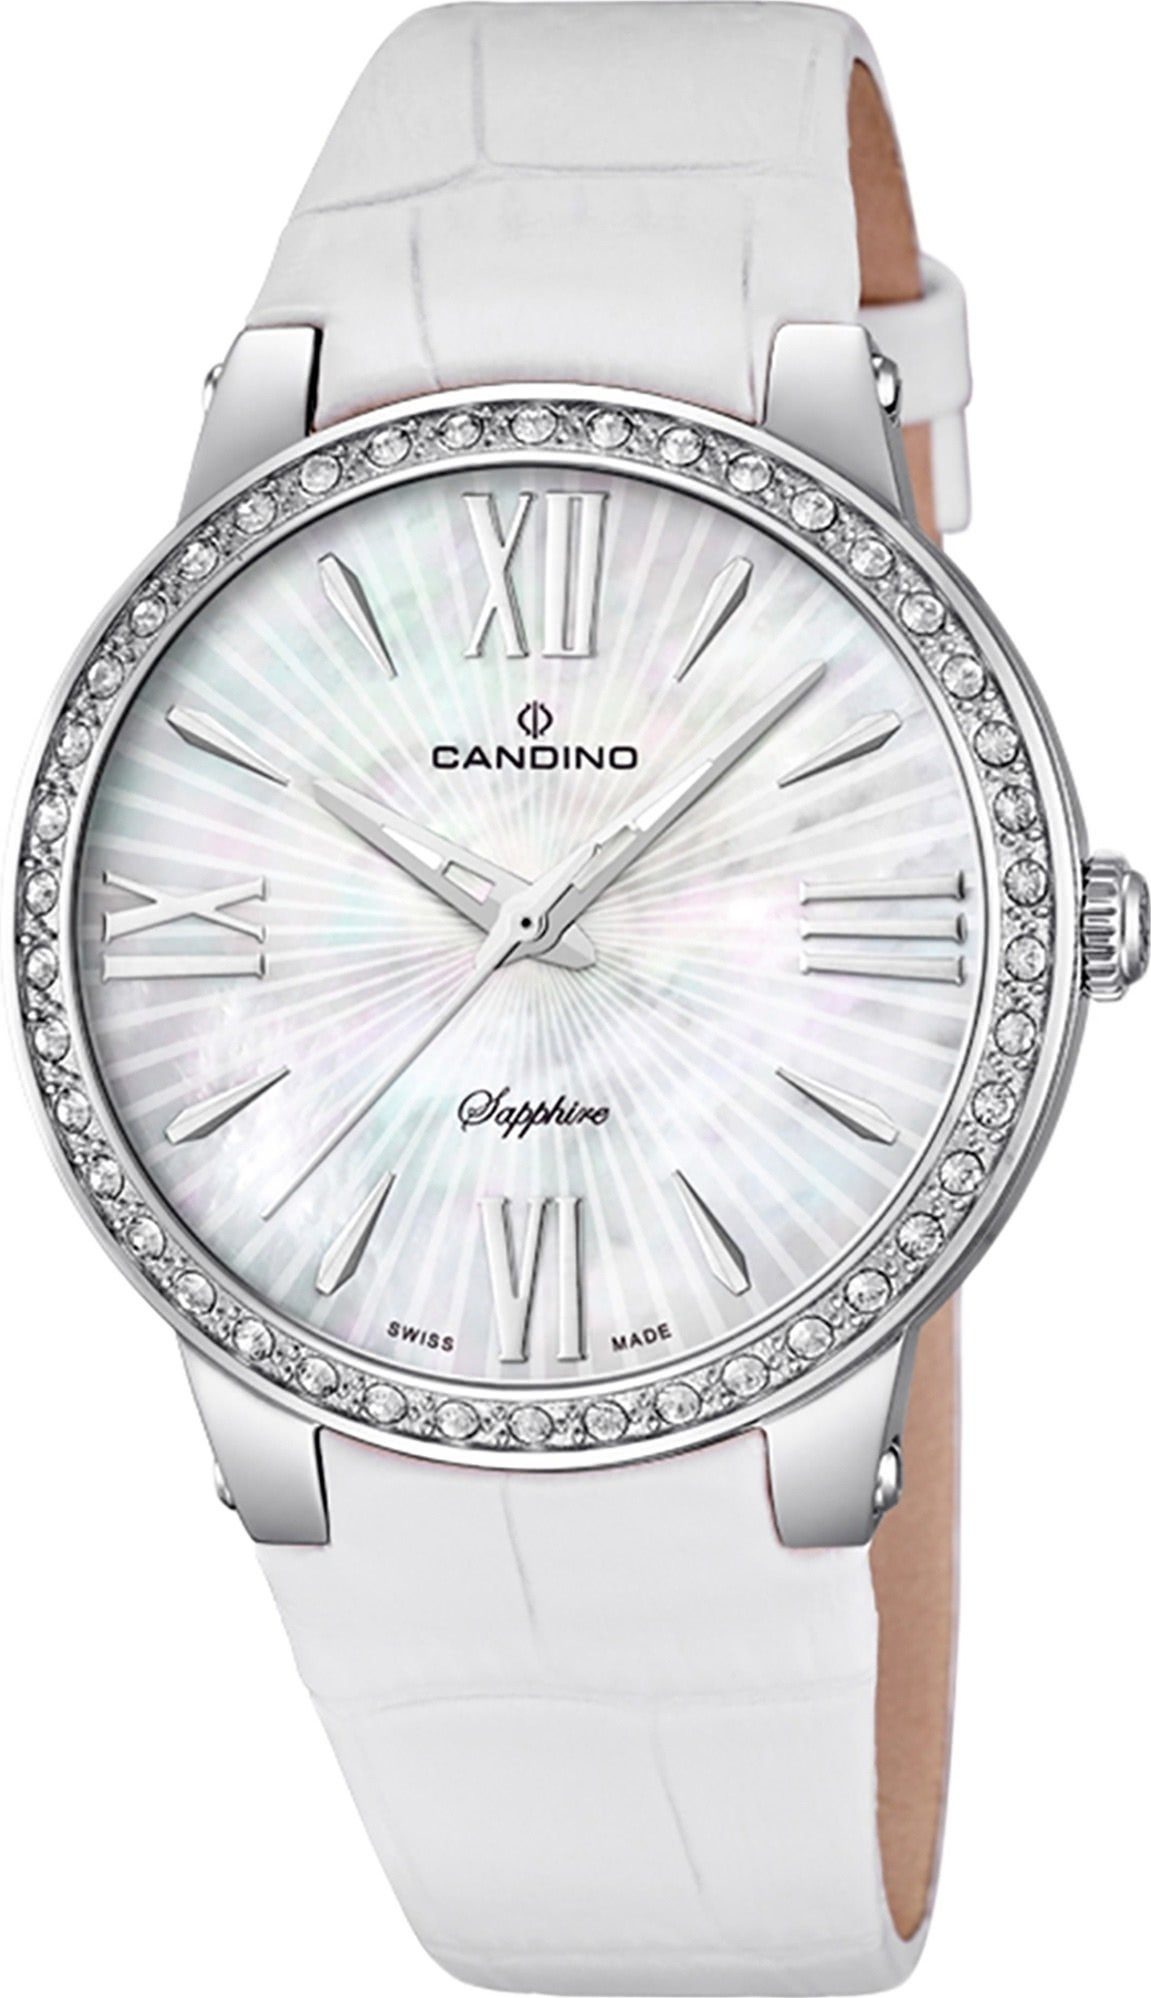 Armbanduhr Lederarmband Candino weiß, Fashion Damen Quarzuhr Quarzuhr Candino C4597/1, rund, Analog Damen